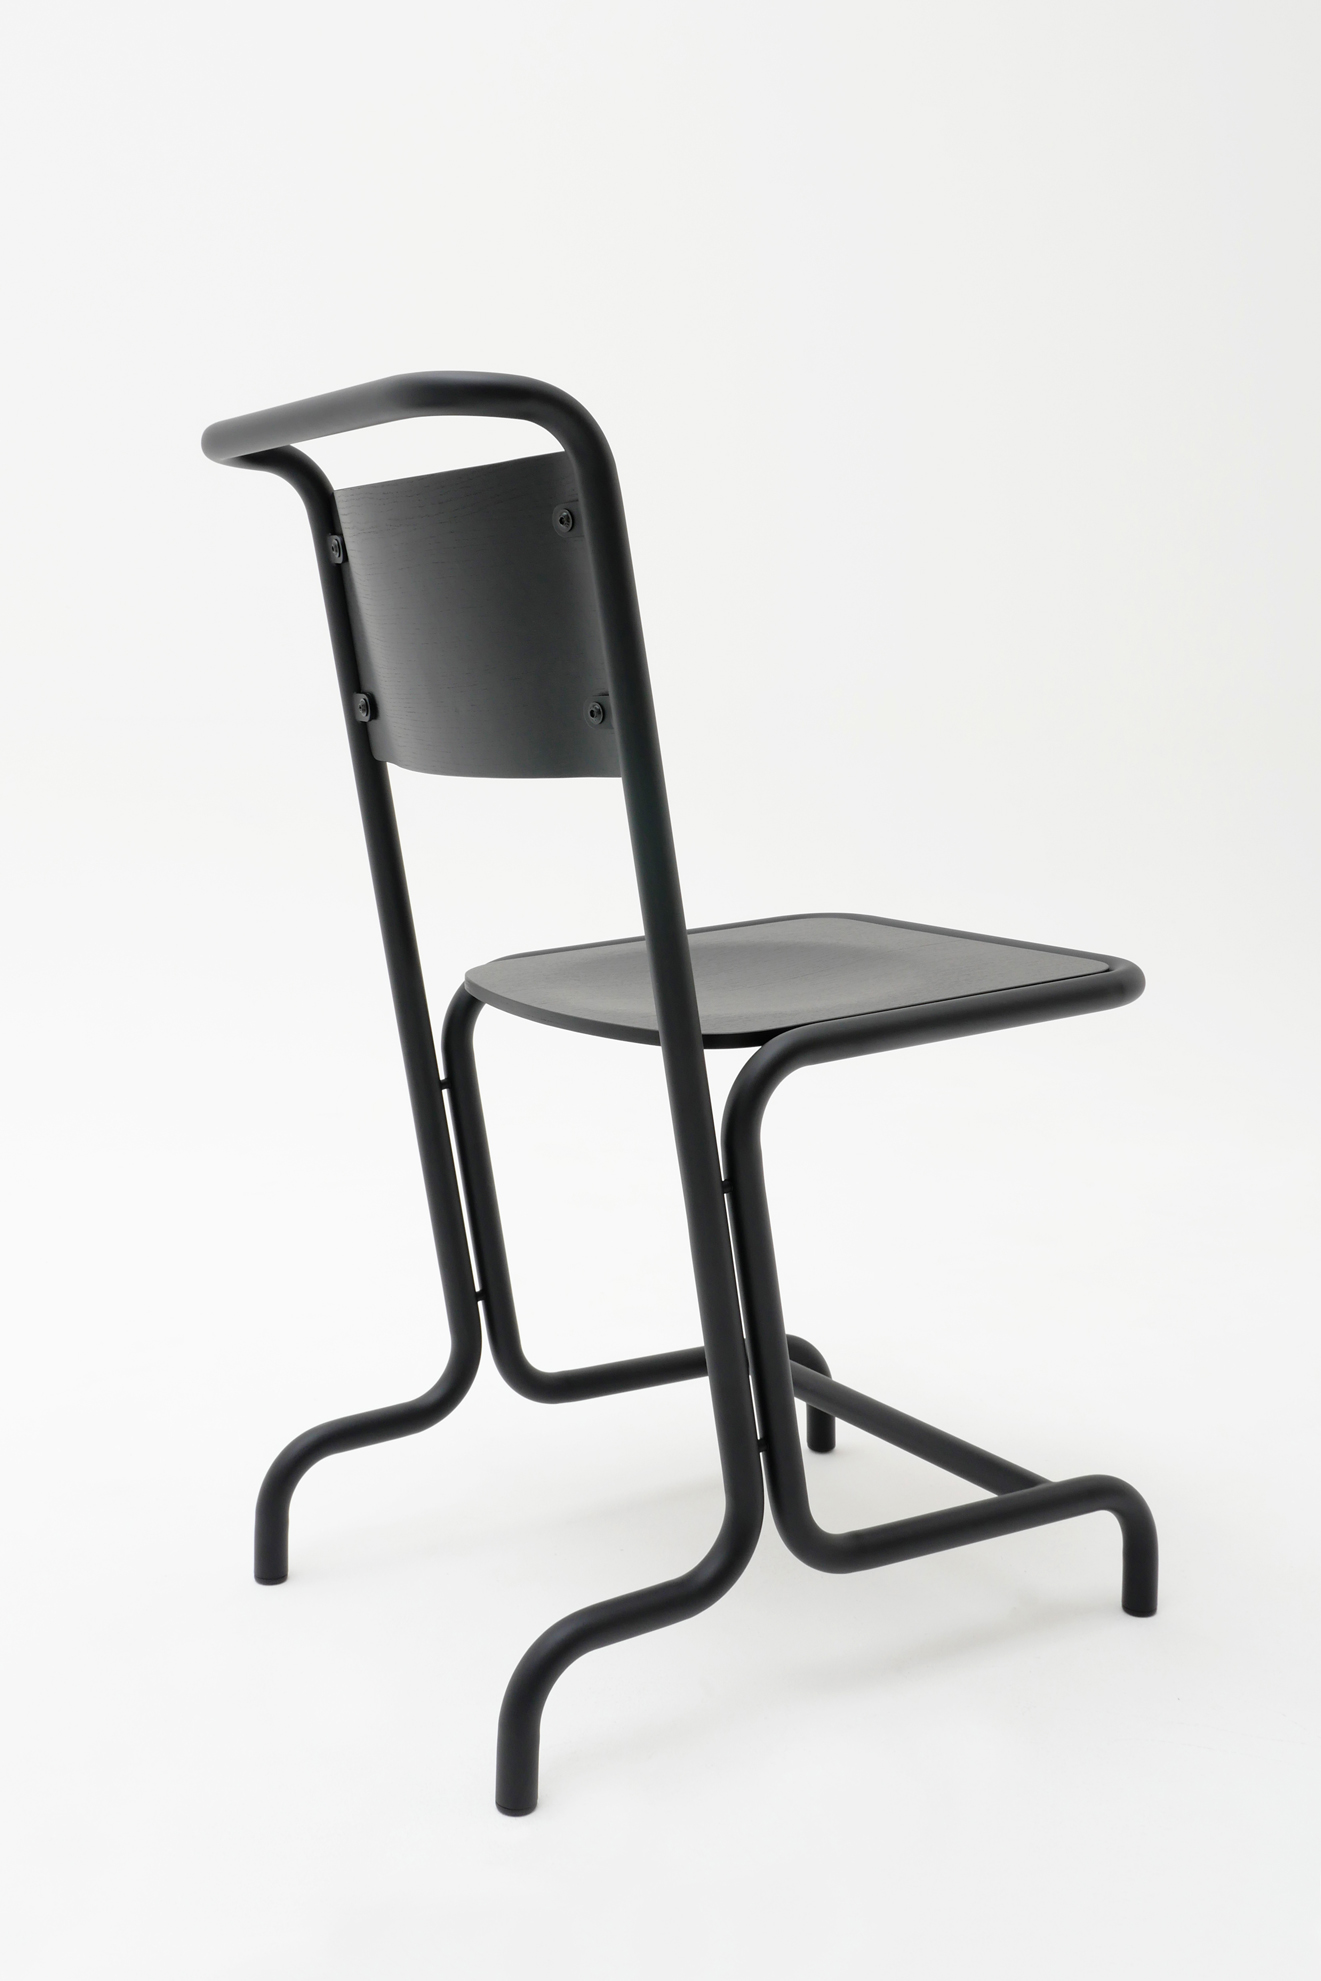 Laszlo Stahl Stuhl schwarz Esche Holz Atelier Haußmann